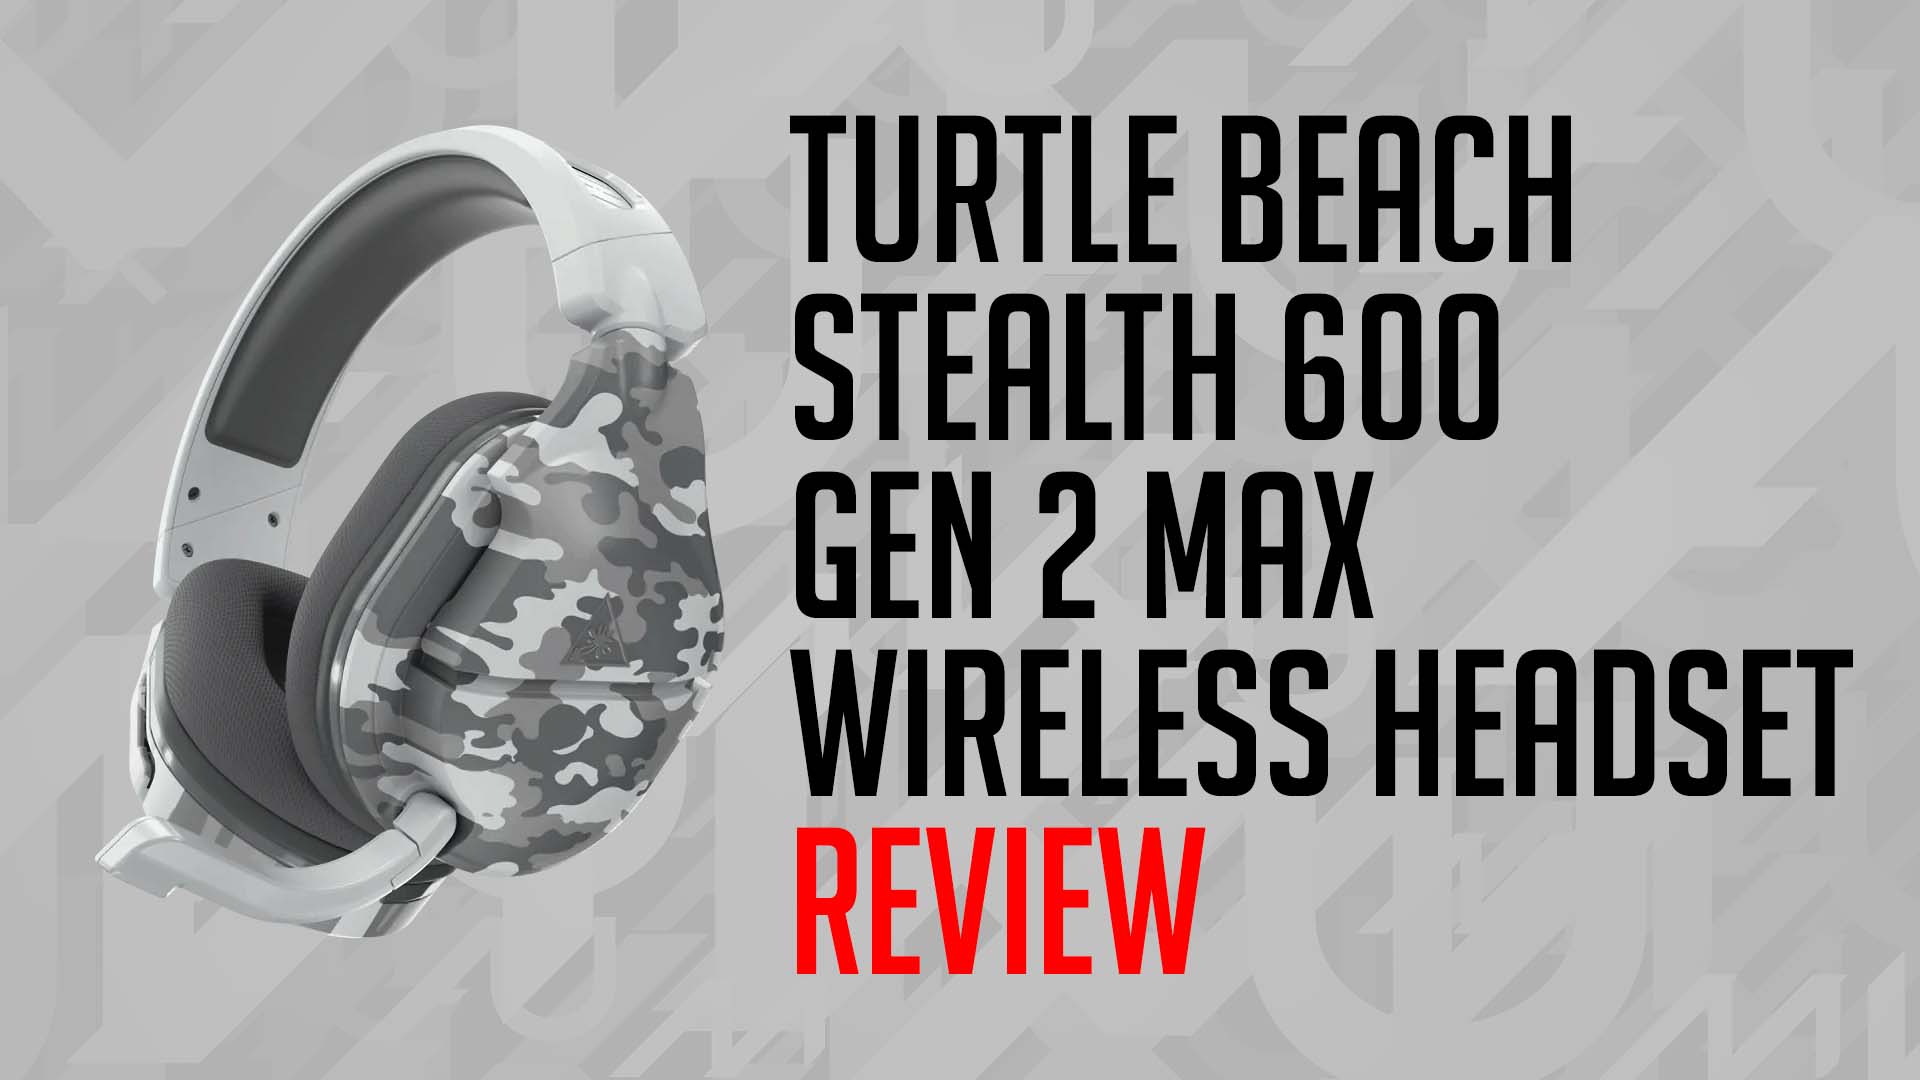 Turtle Beach Stealth 600 Gen 2 Max review